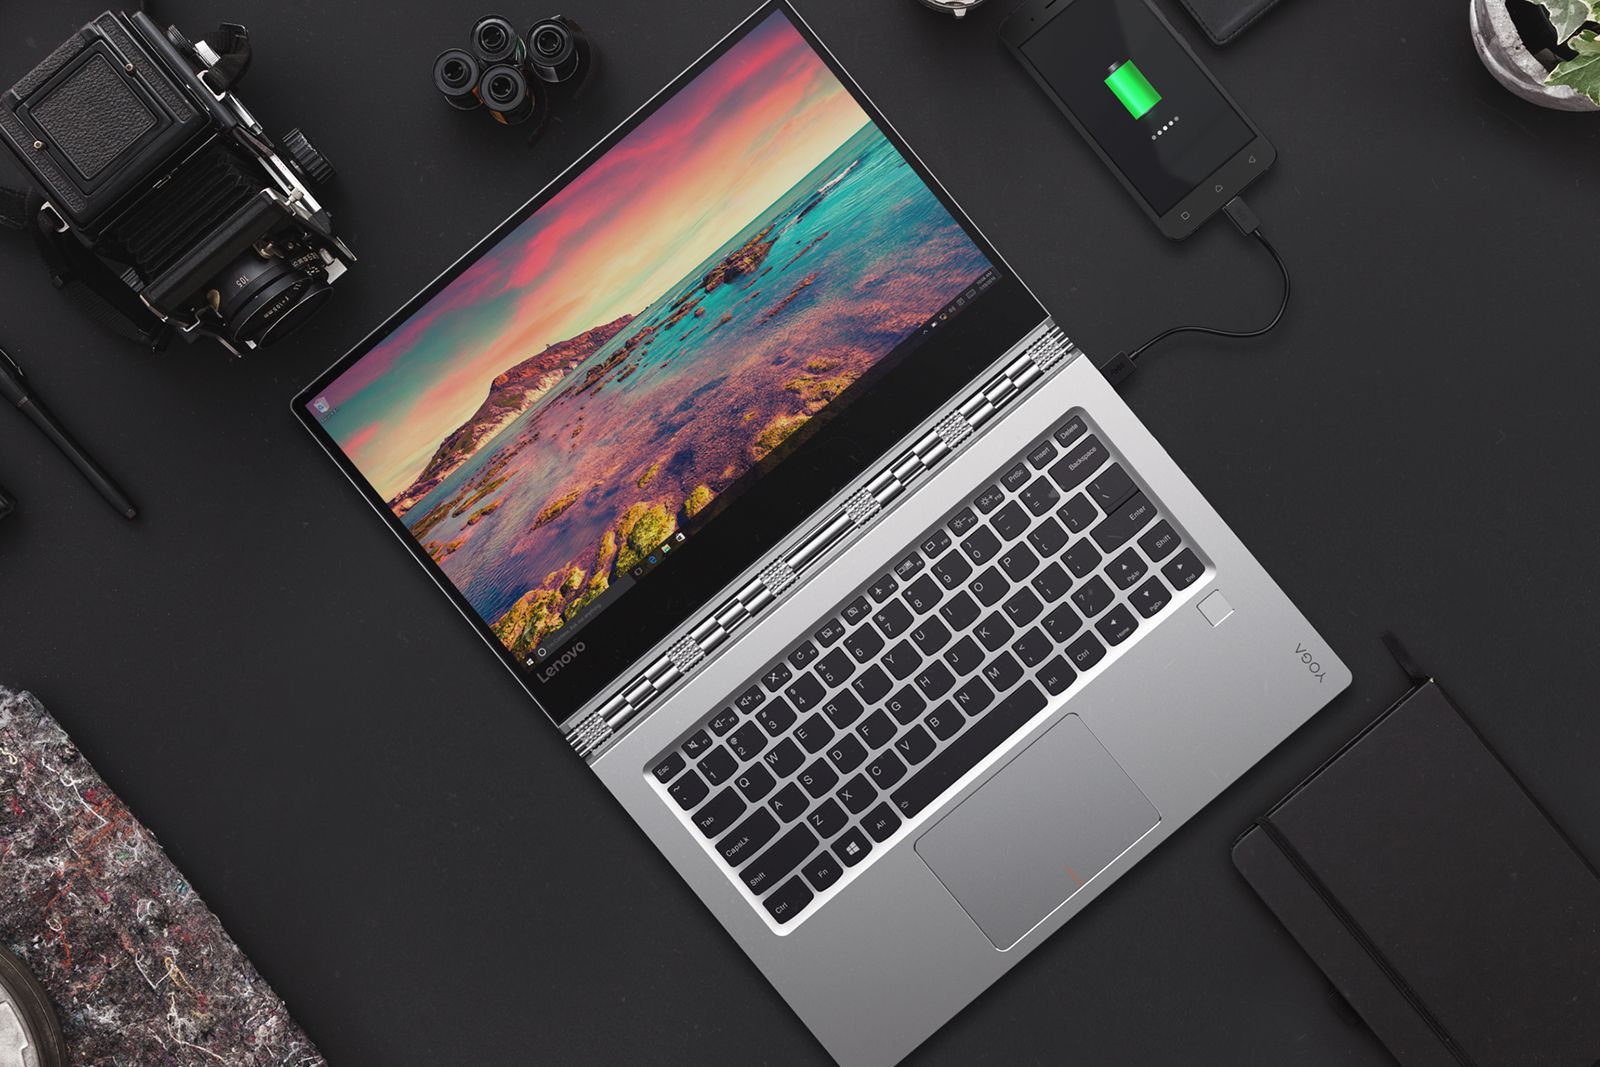 lenovo yoga 910 edge display makes this convertible laptop infinitely awesome image 1